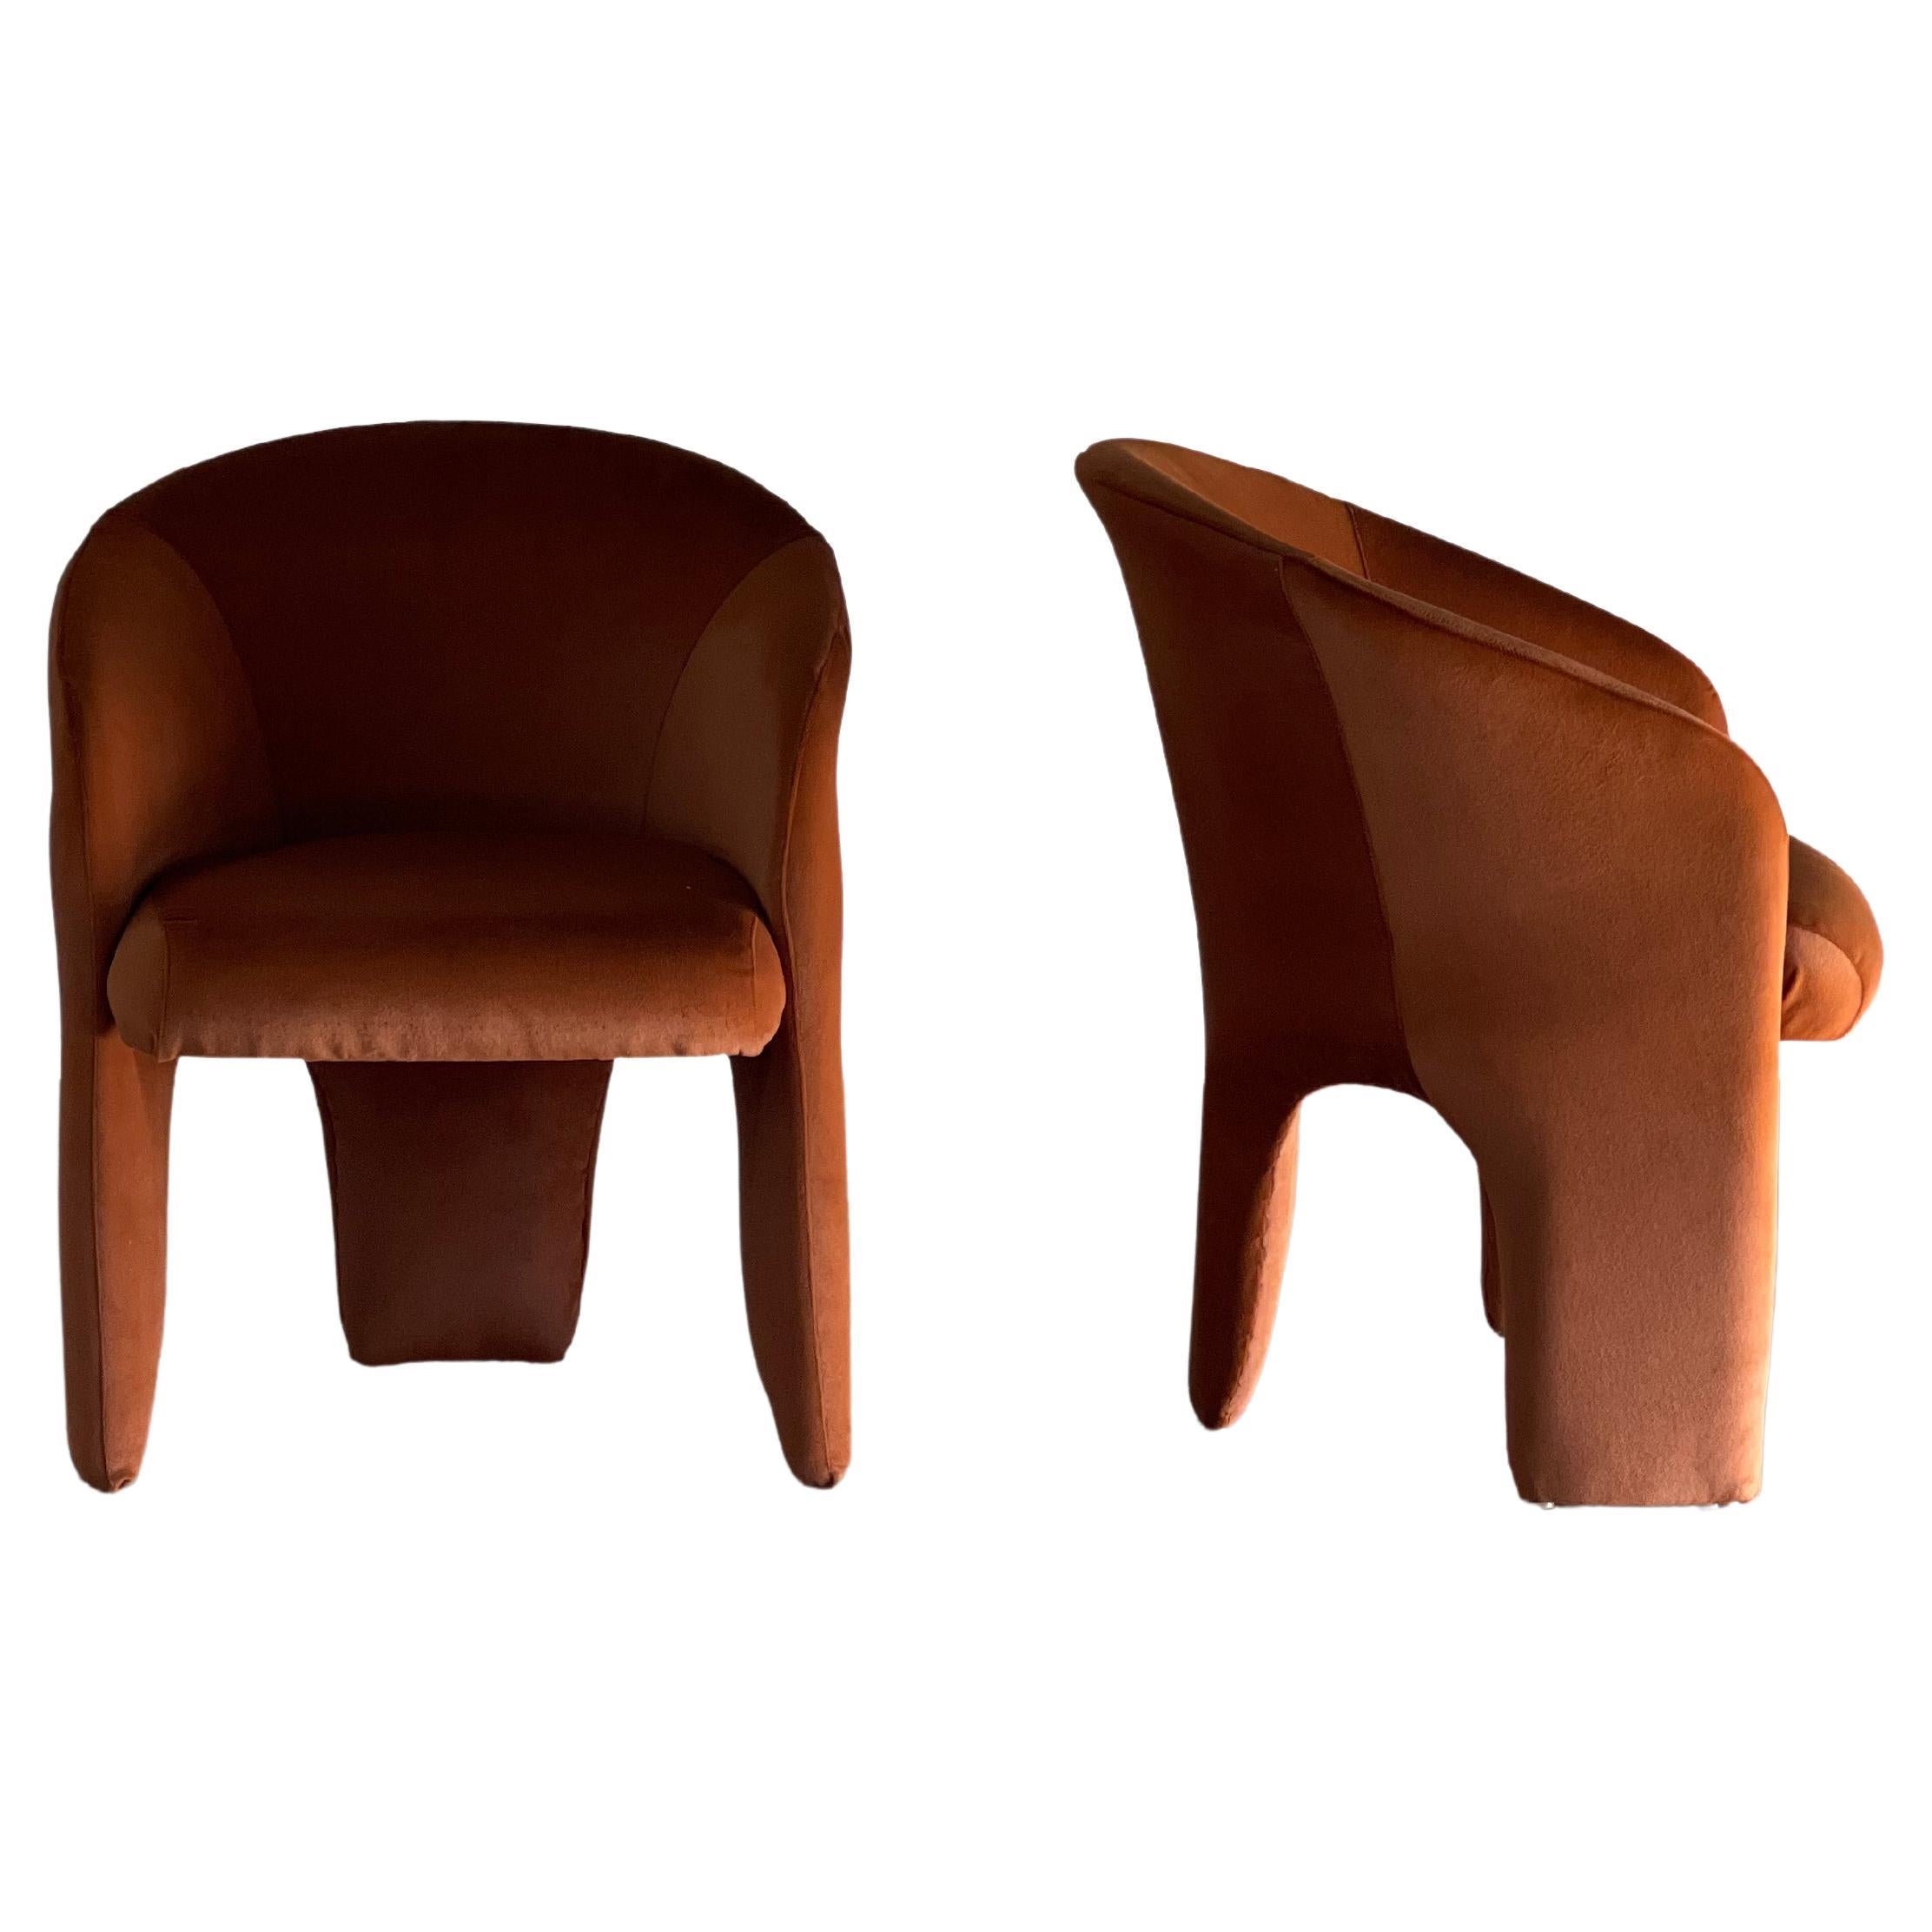 Pair of Vintage Three-Legged Sculptural Armchairs